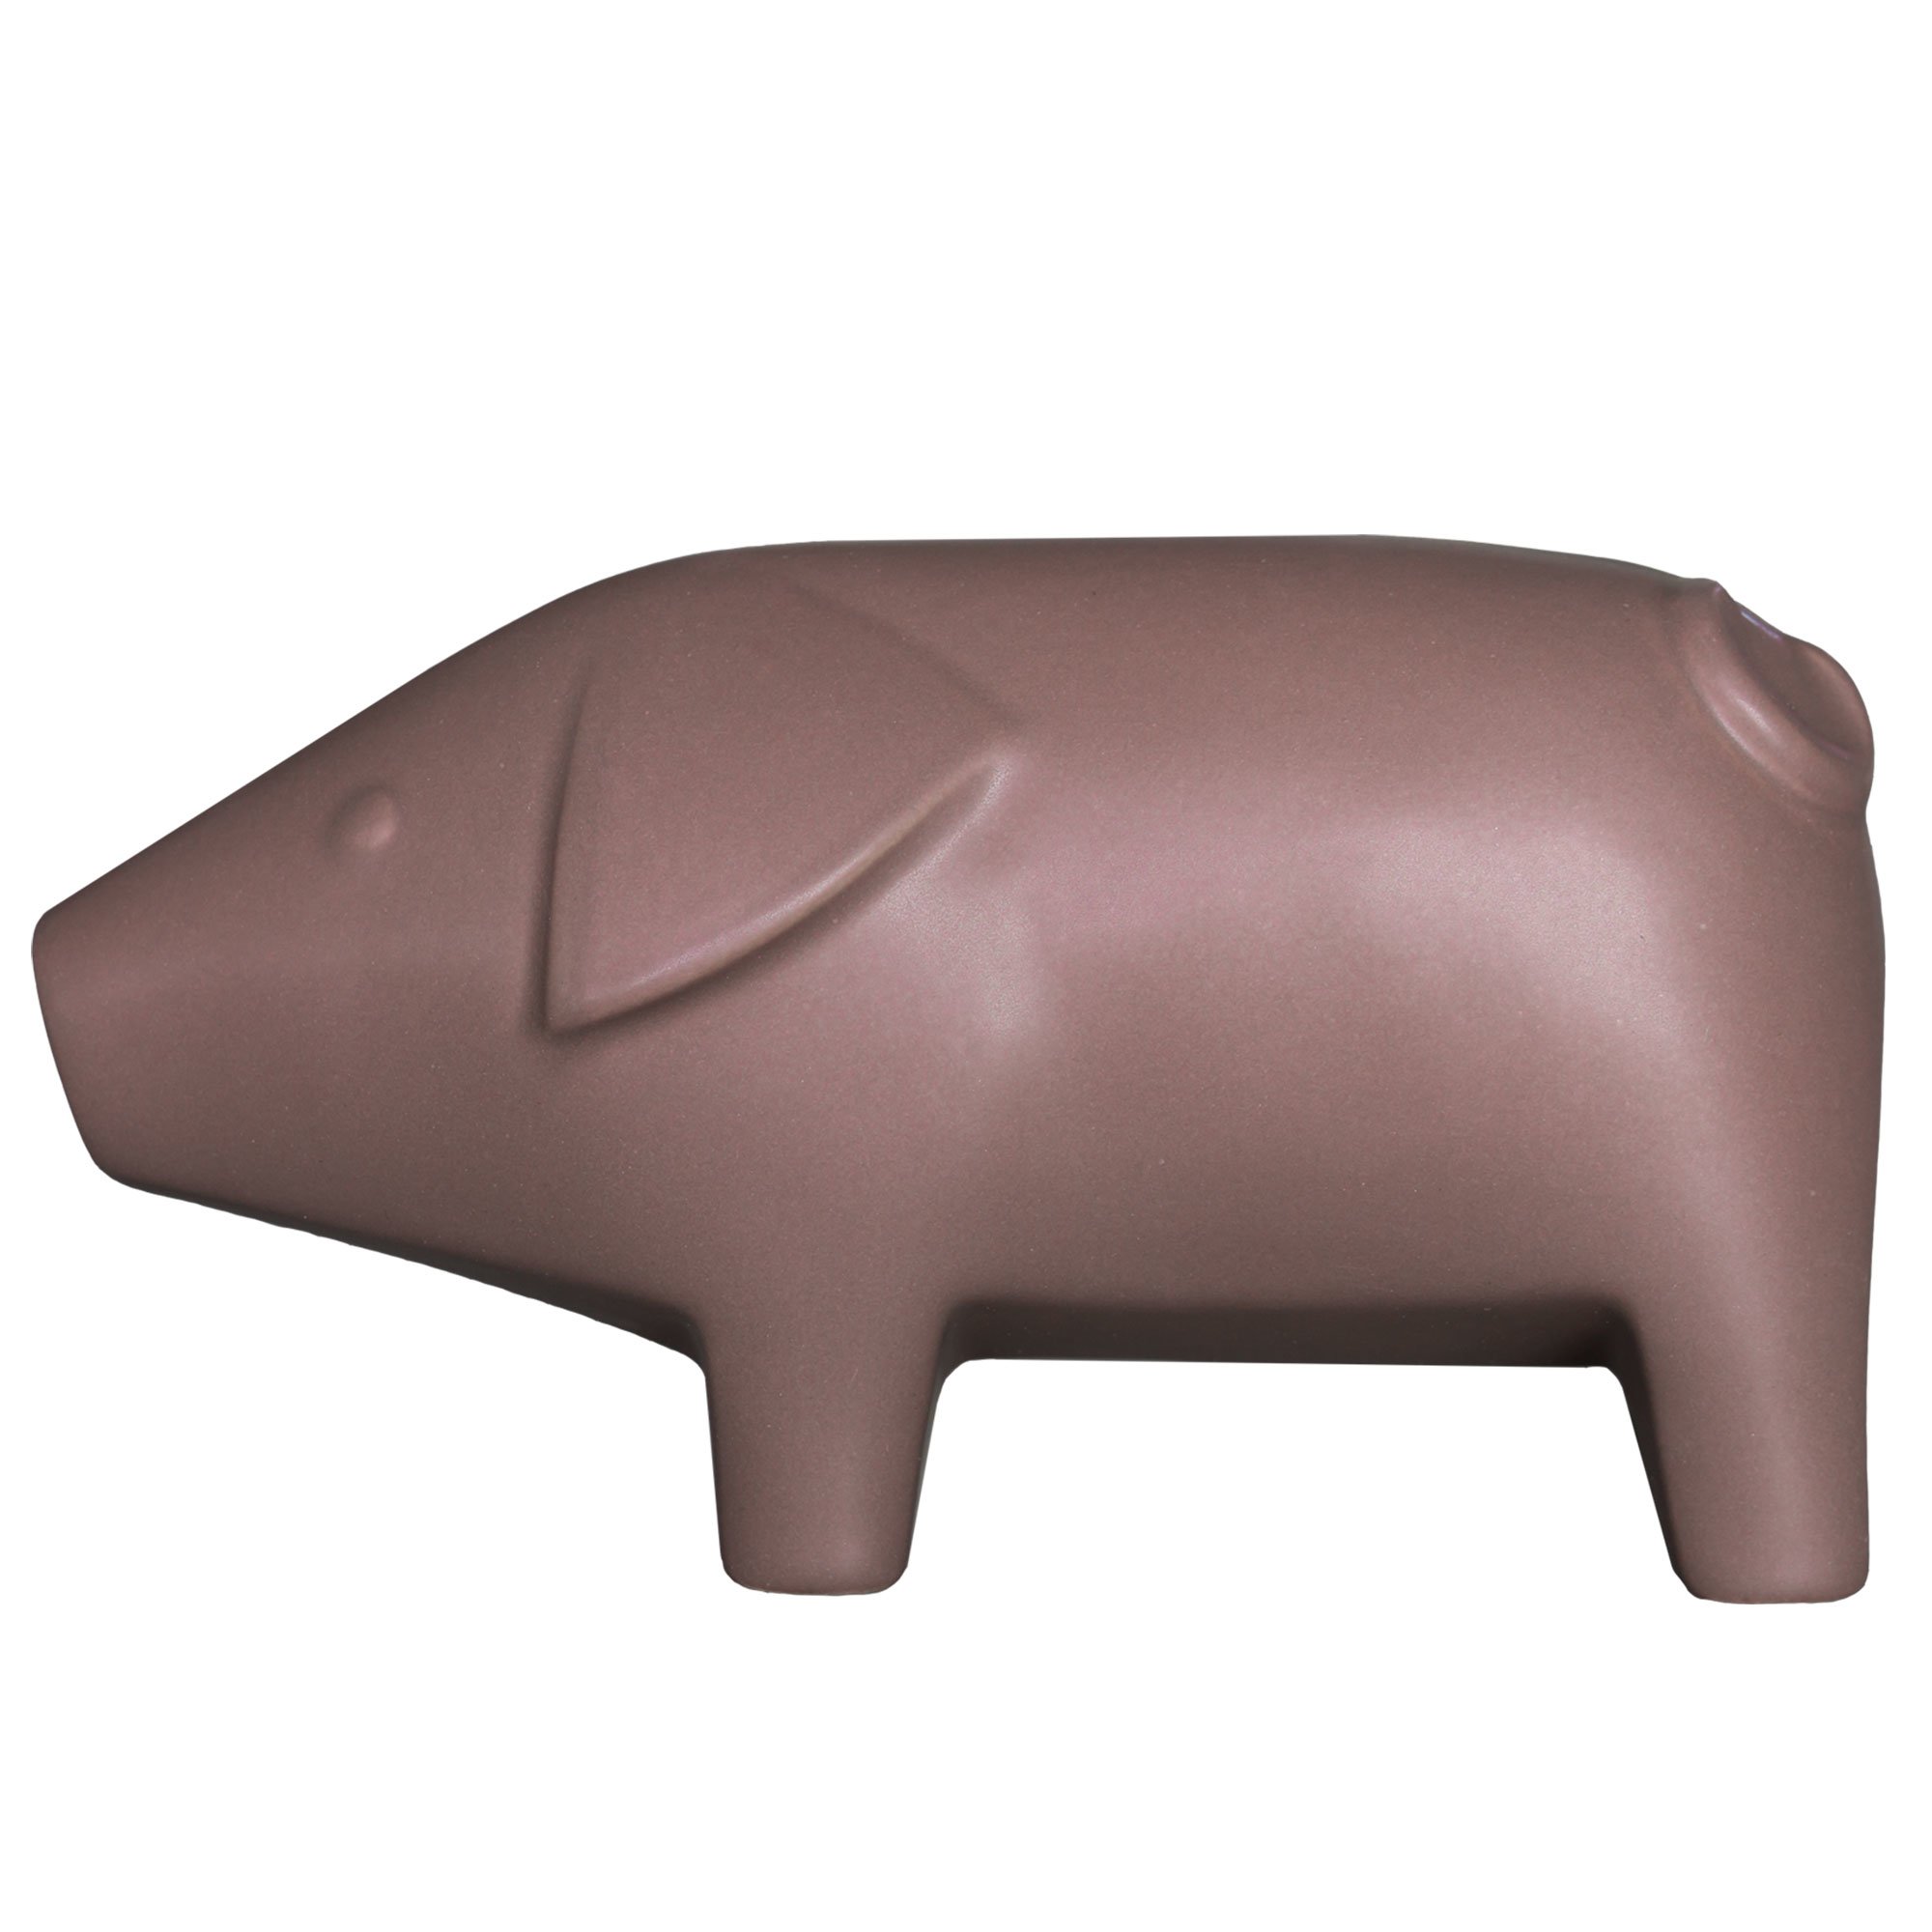 DBKD Swedish Pig Small, 16 cm, maroon